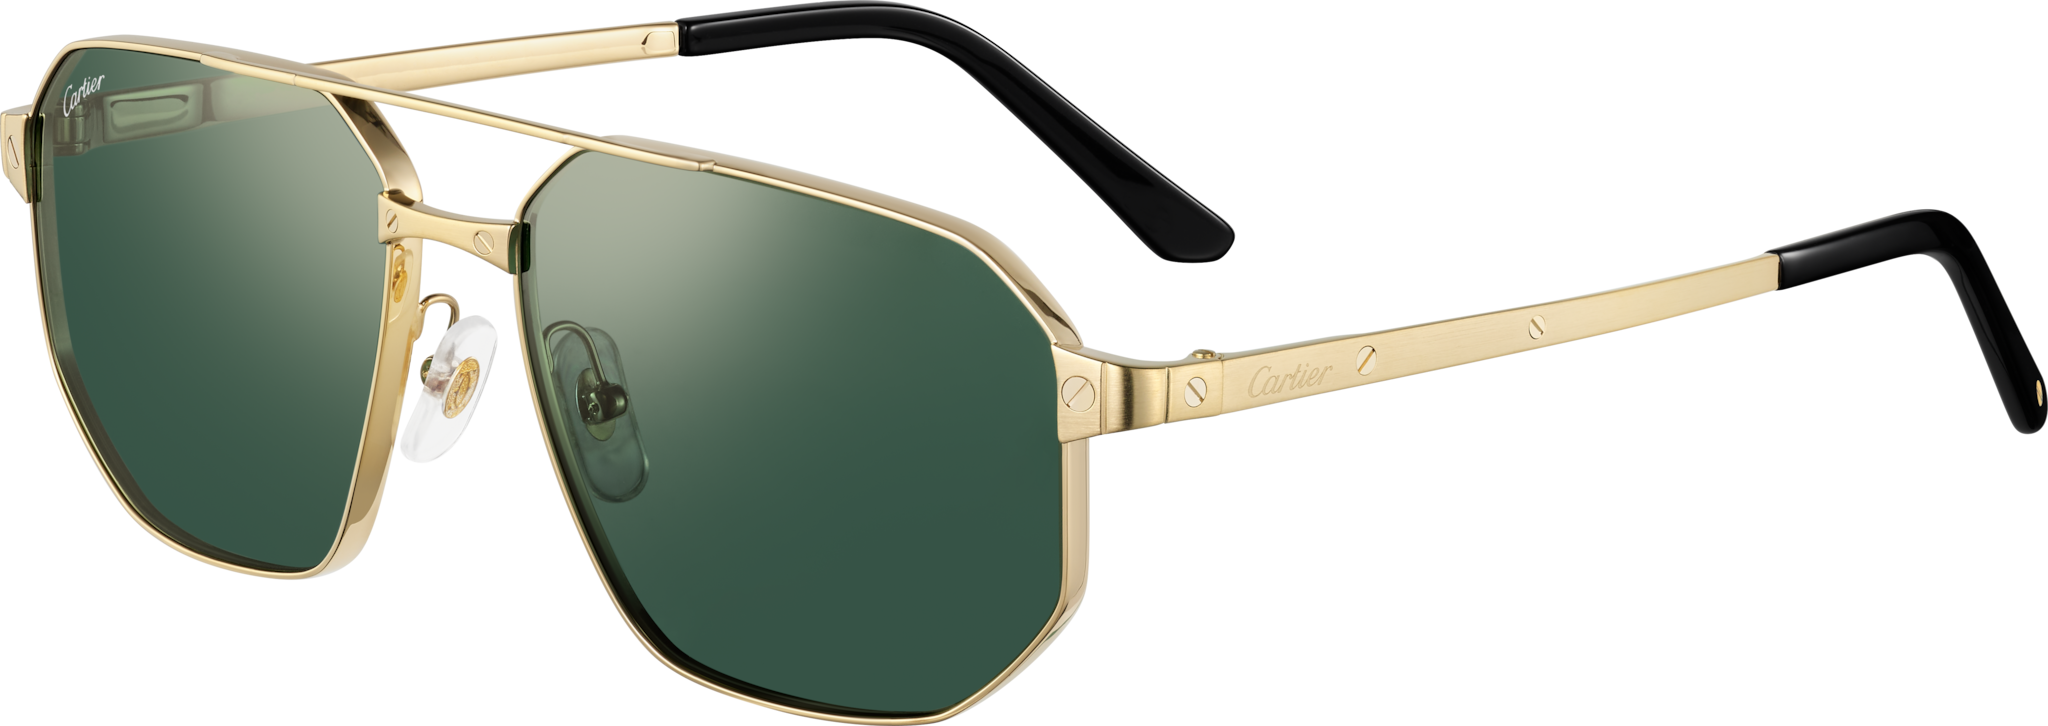 Santos de Cartier 太陽眼鏡光滑及磨砂金色飾面金屬，綠色鏡片